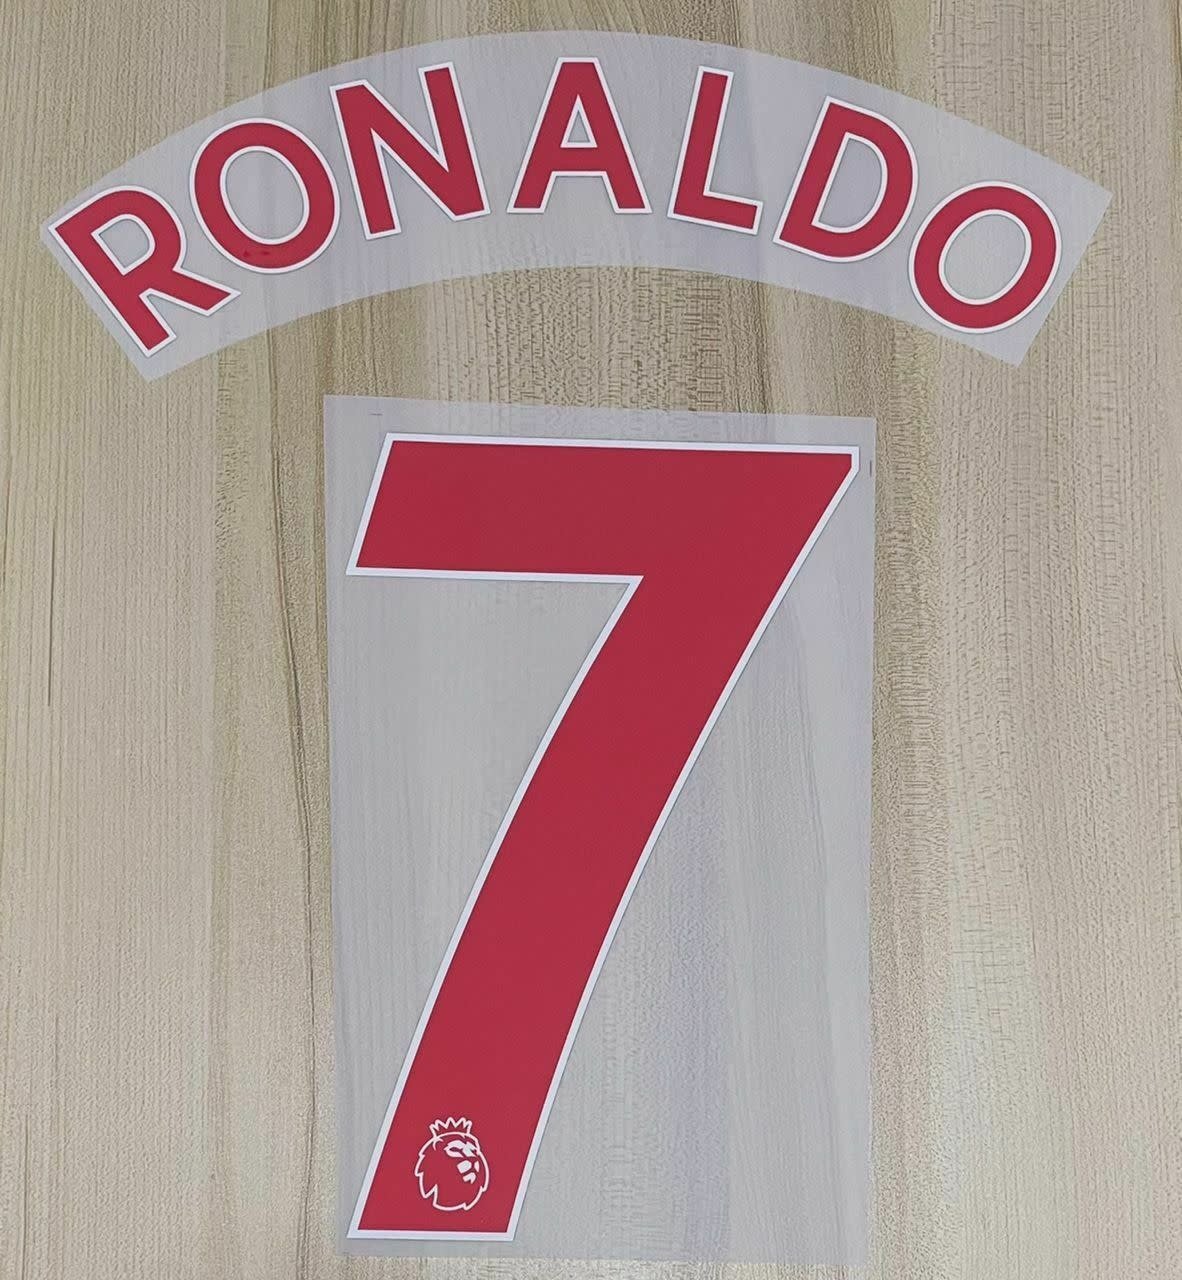 Ronaldo #7 Manchester United 21/22 Away Red Youth Nameset